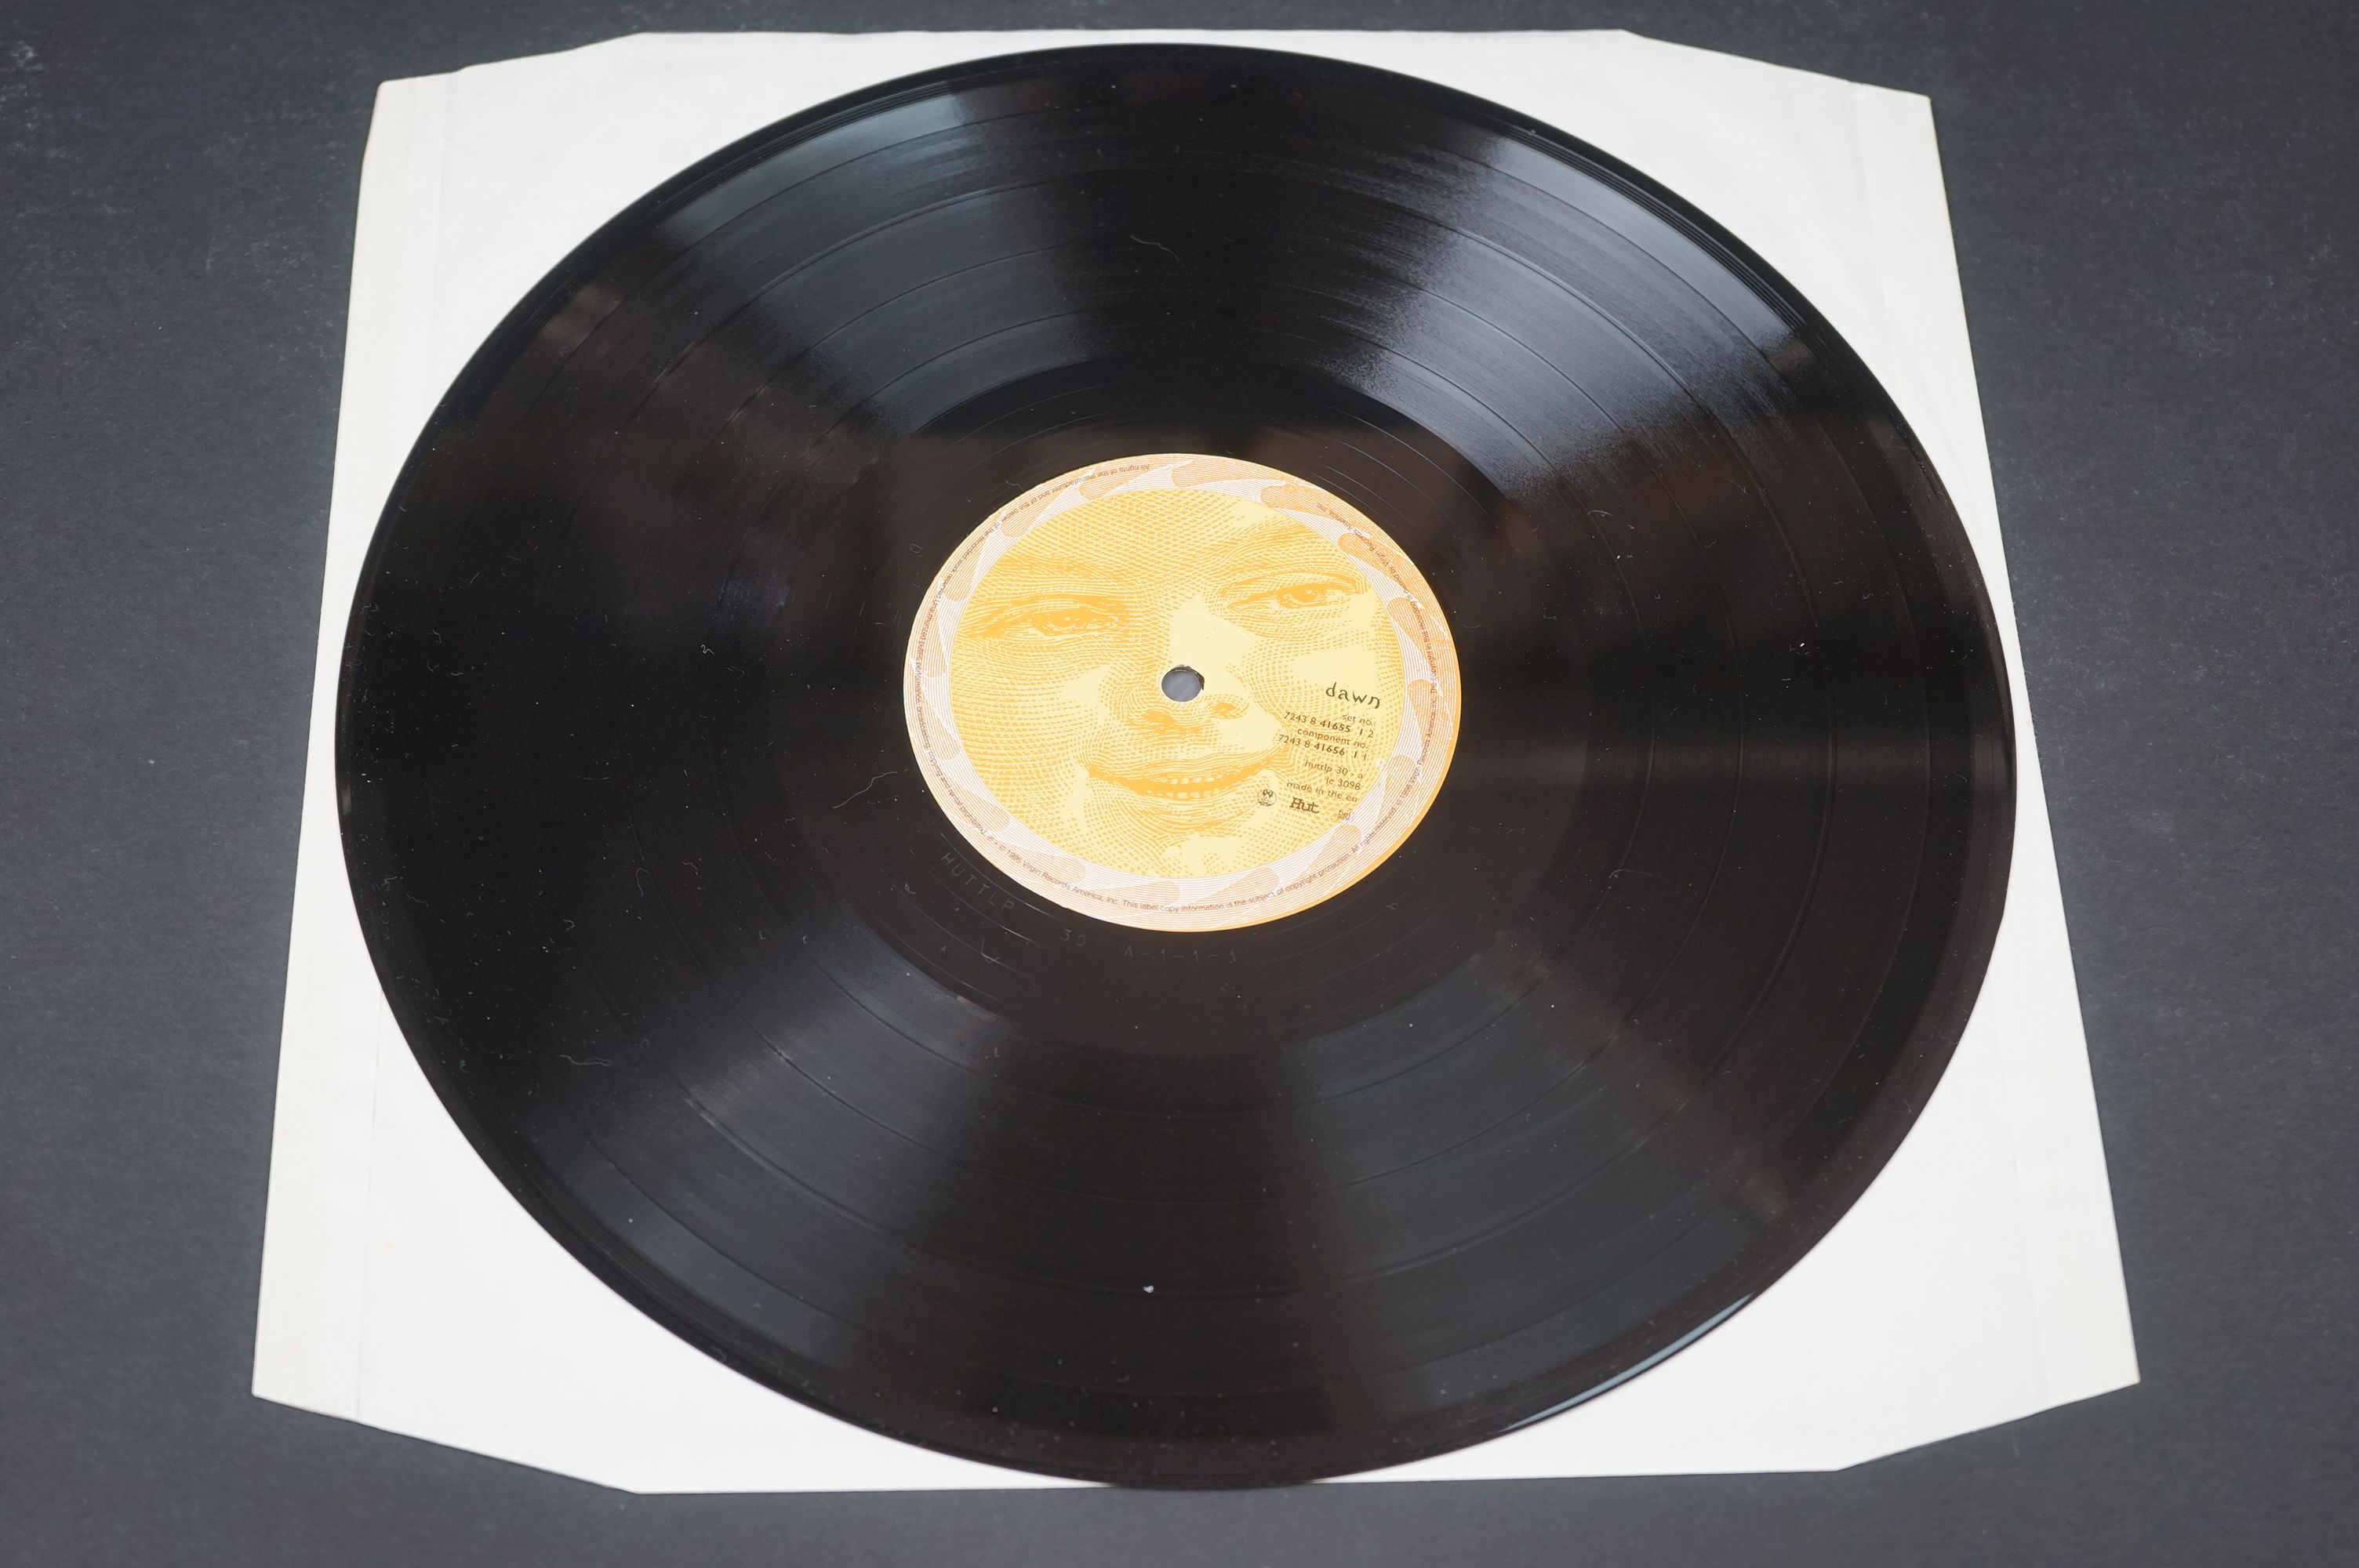 Vinyl - The Smashing Pumpkins Mellon Collie and the Infinite Sadness 3 LP on Hut, HUTLP30, - Image 7 of 12